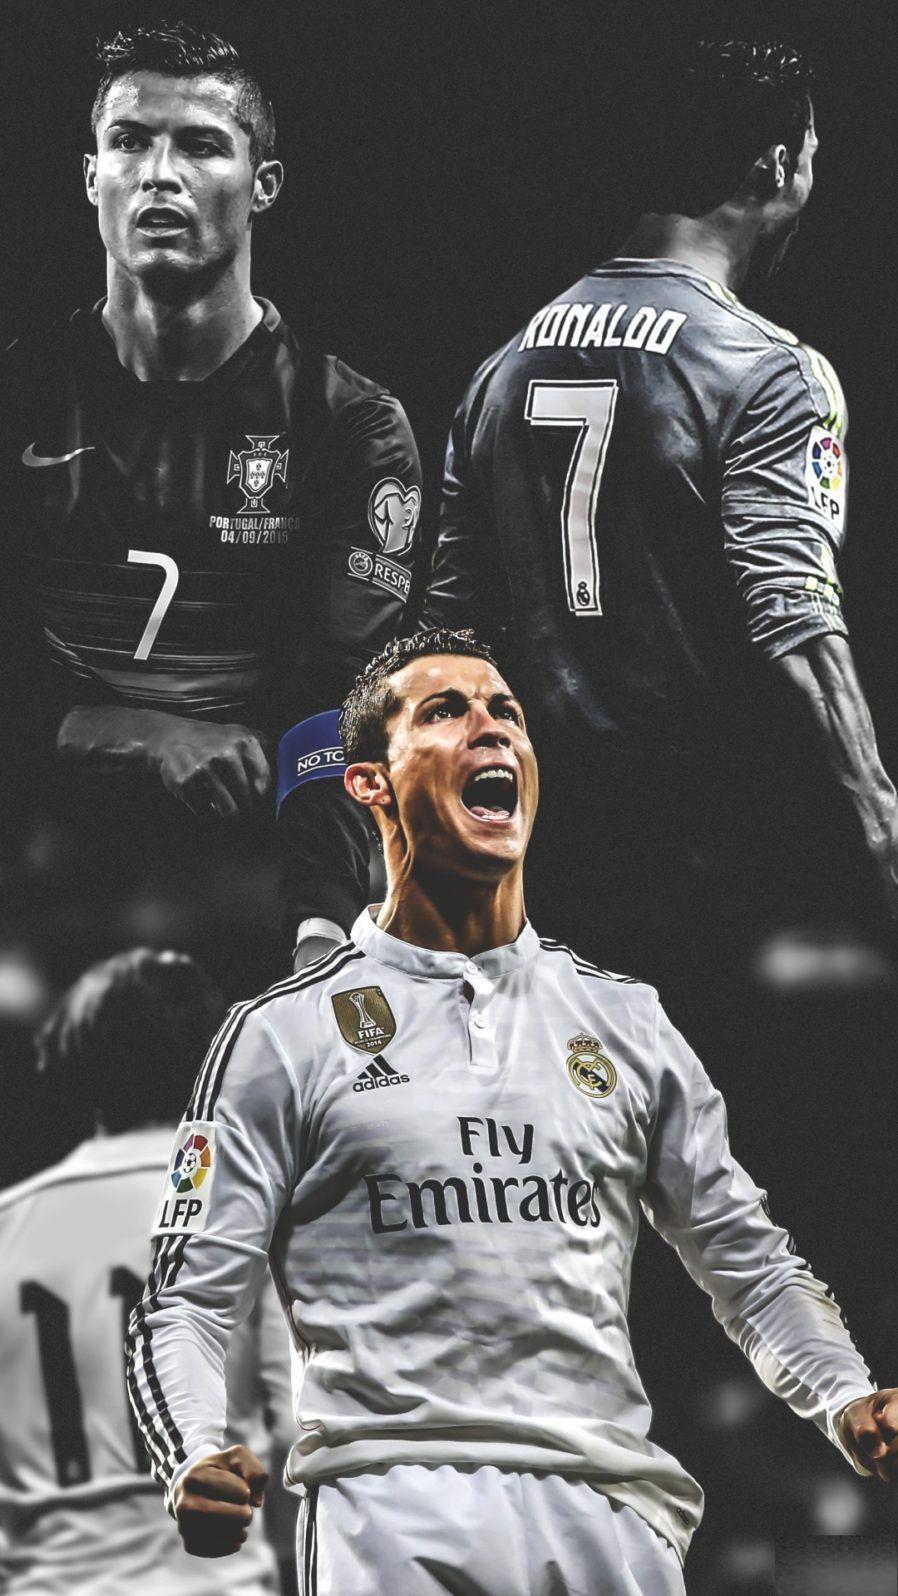 Cristiano Ronaldo Hd Wallpapers